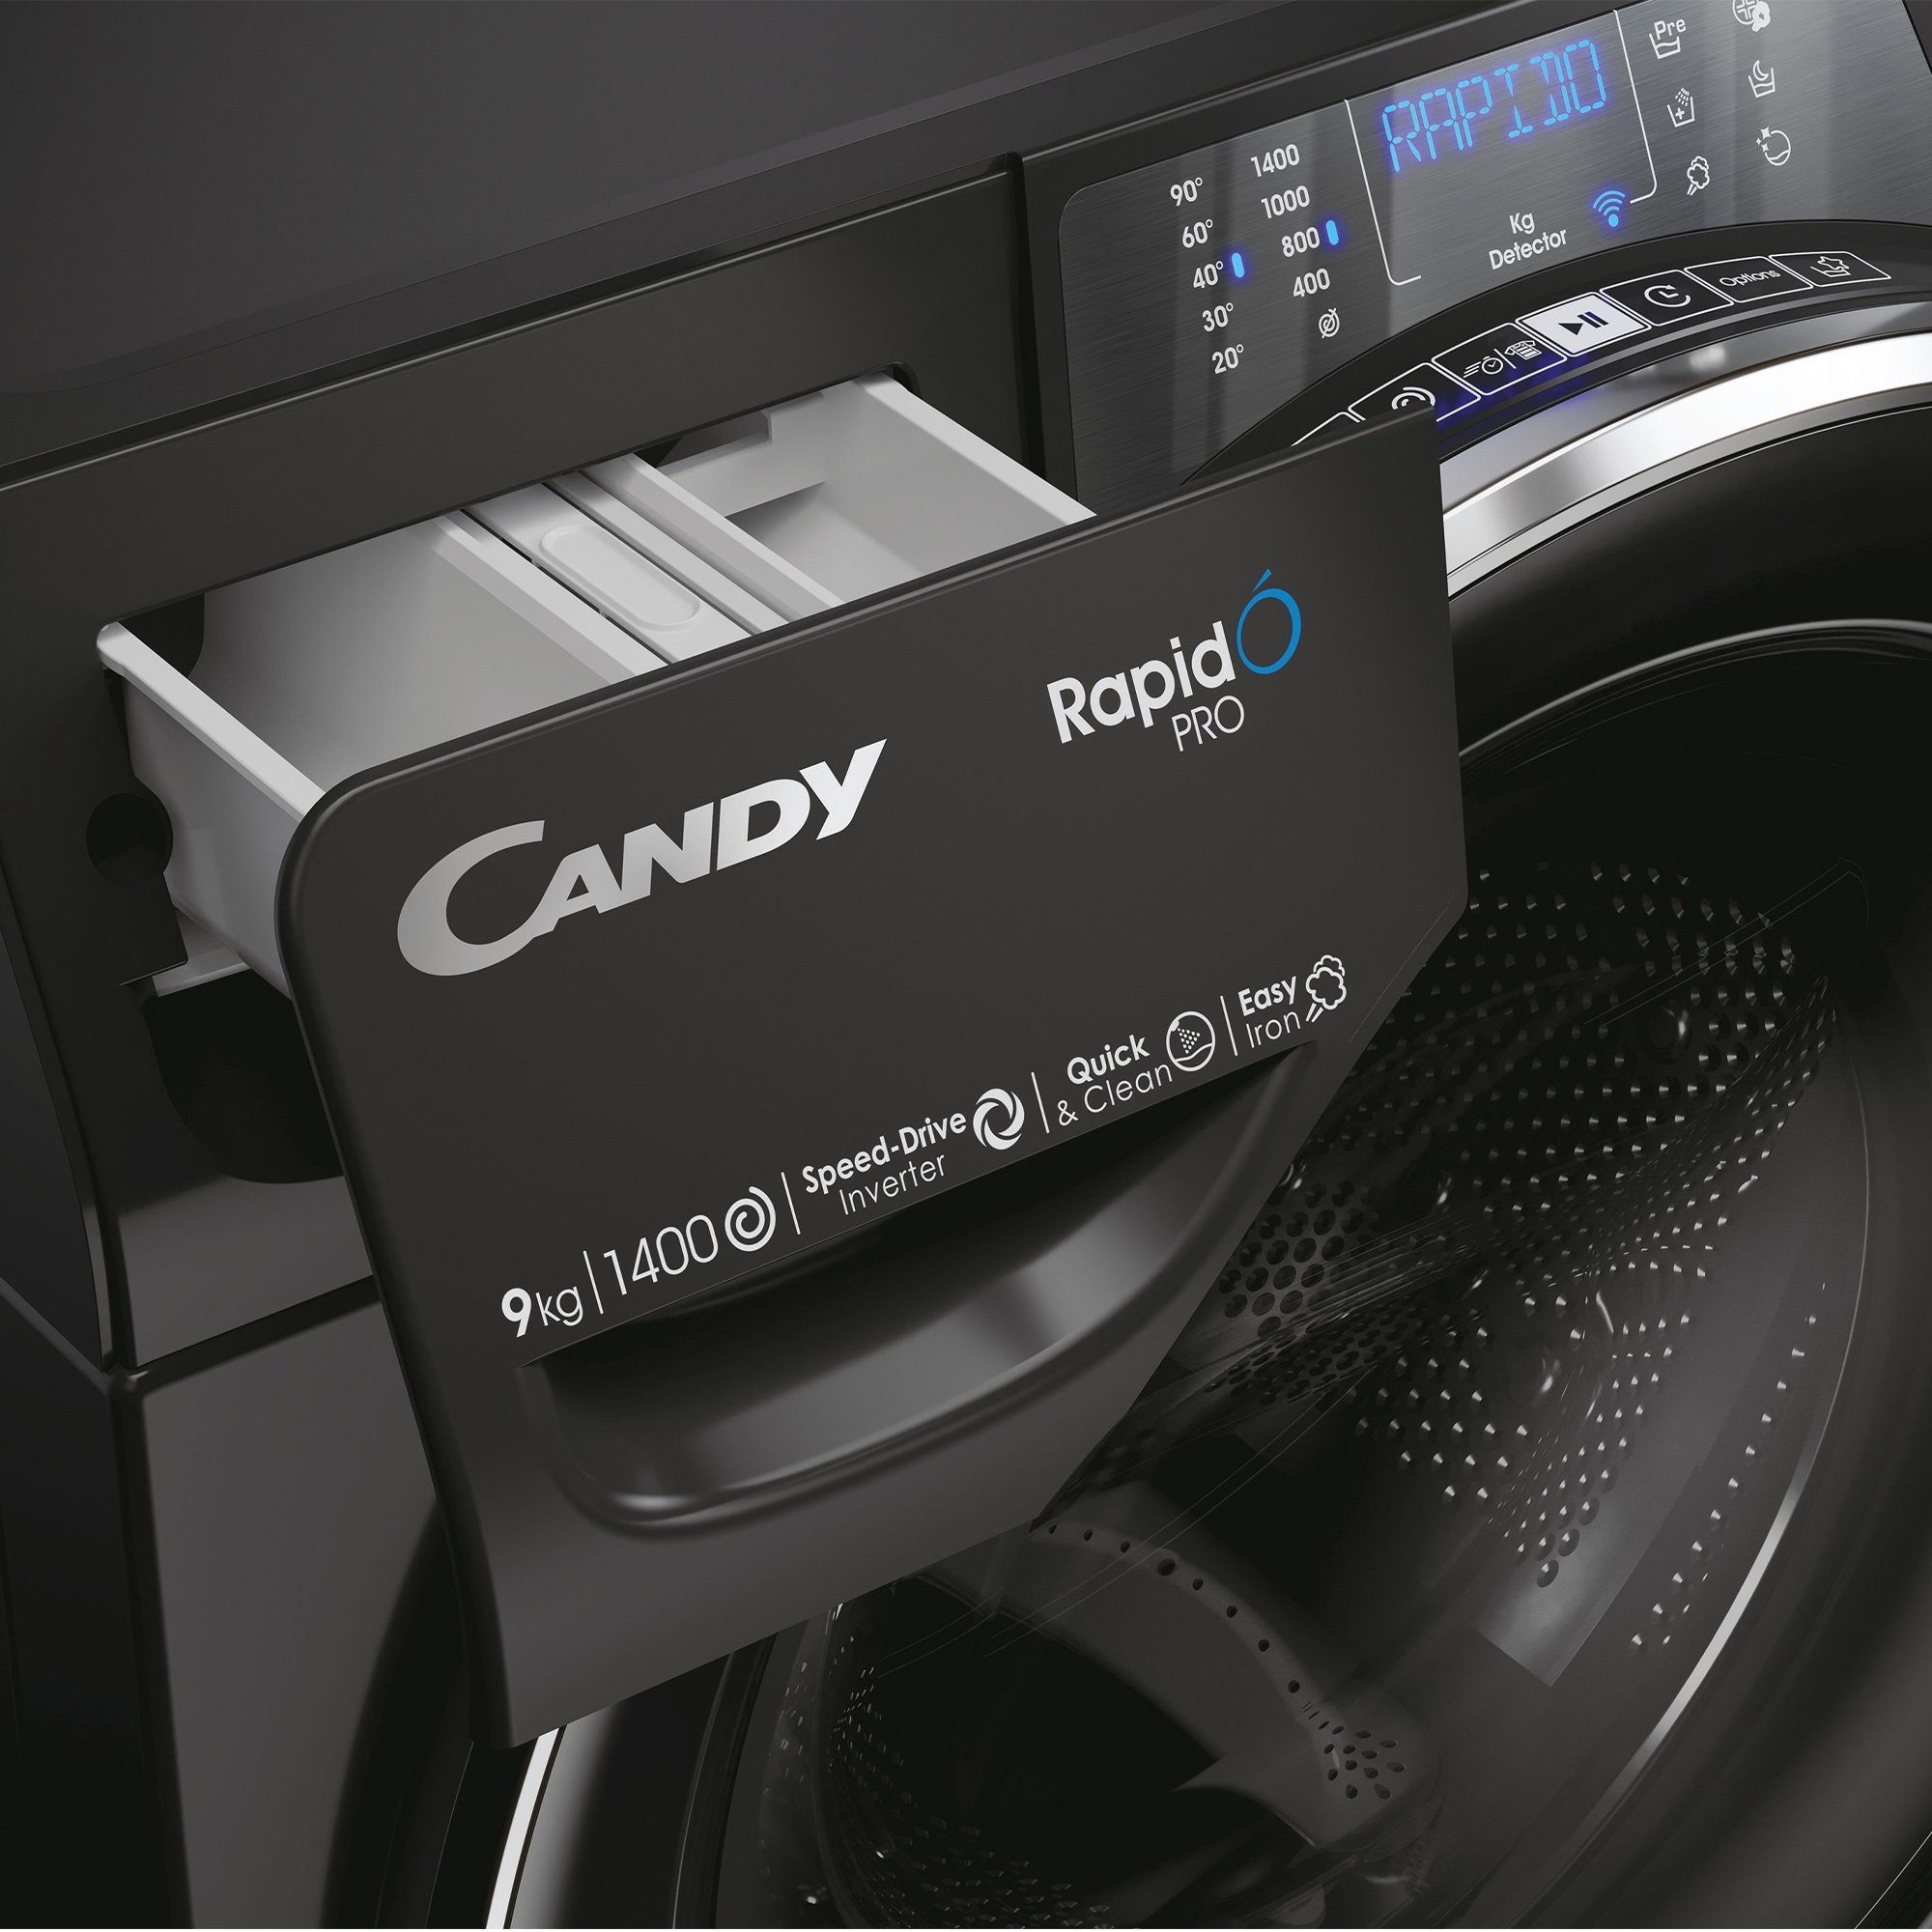 Candy Waschmaschine RAPIDÓ RP 496BWMBCB/1-S, hOn App, Mengenautomatik U/min, Wi-Fi kg, Dampffunktion, Bluetooth 9 1400 und